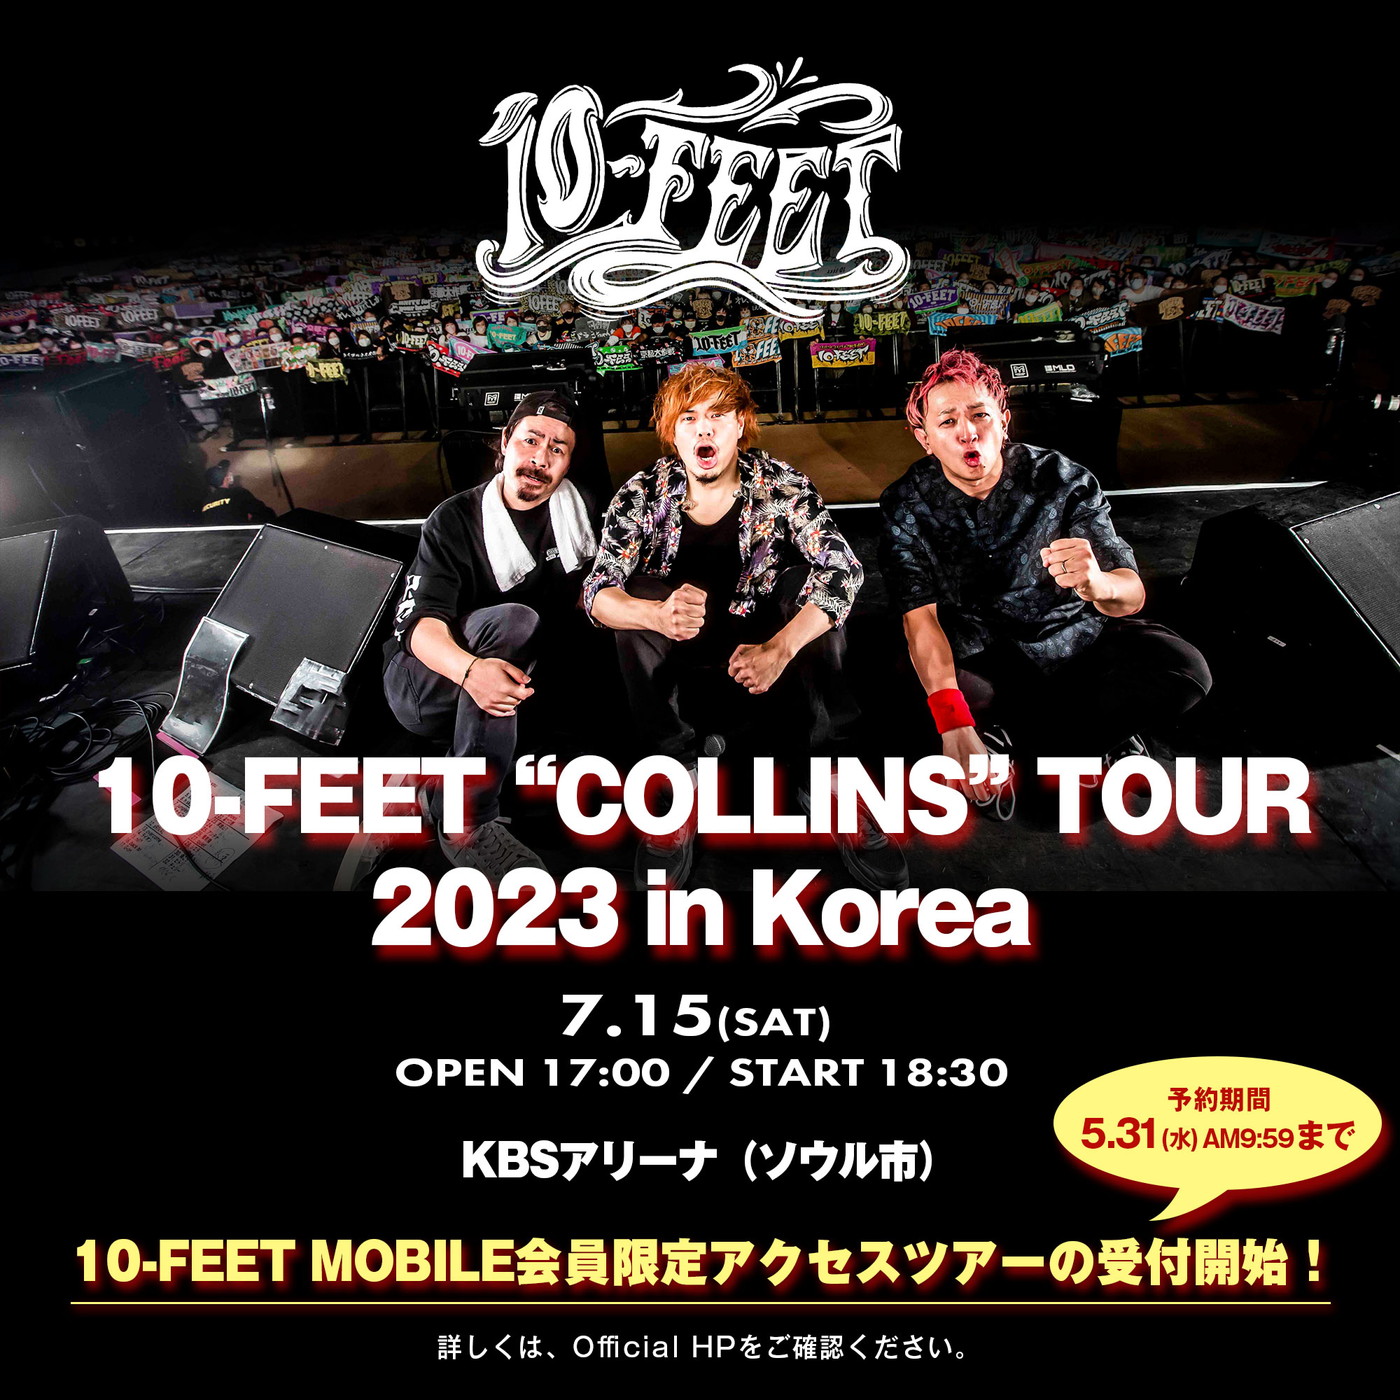 10-FEET、初の韓国ワンマン公演が開催決定！ モバイル会員限定でアクセスツアーも受付中